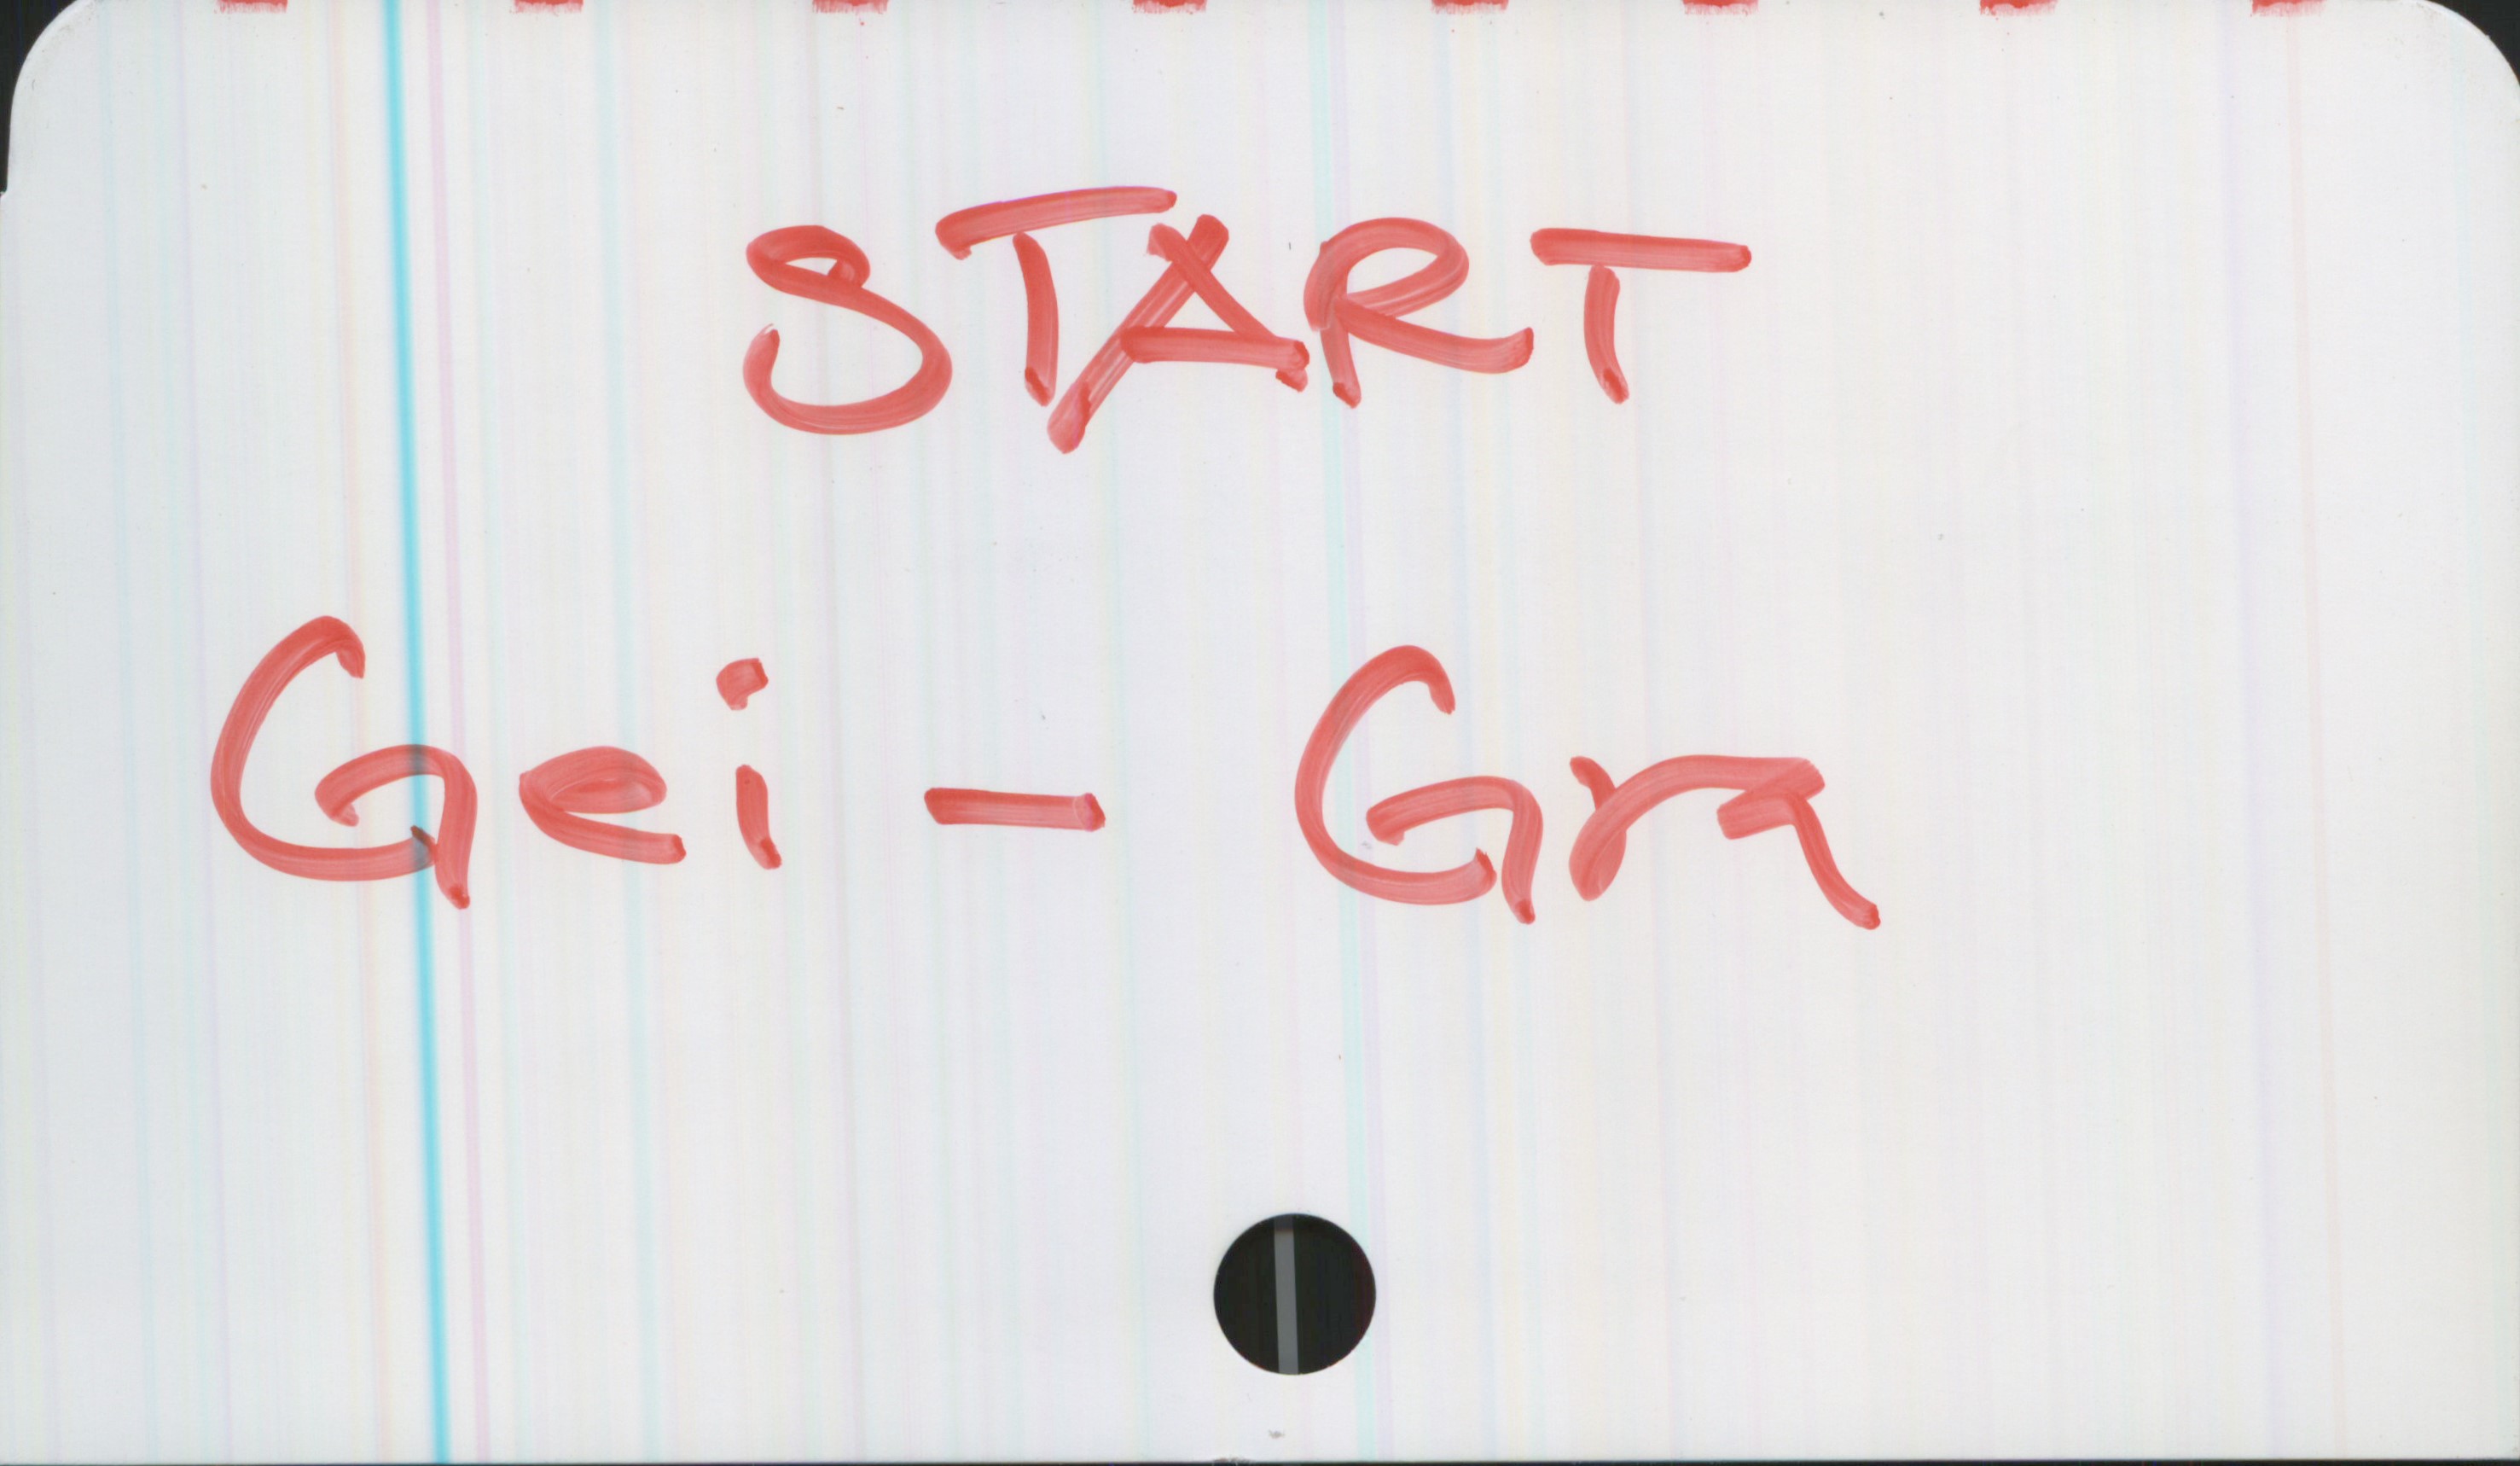 START START
Gei - Gra